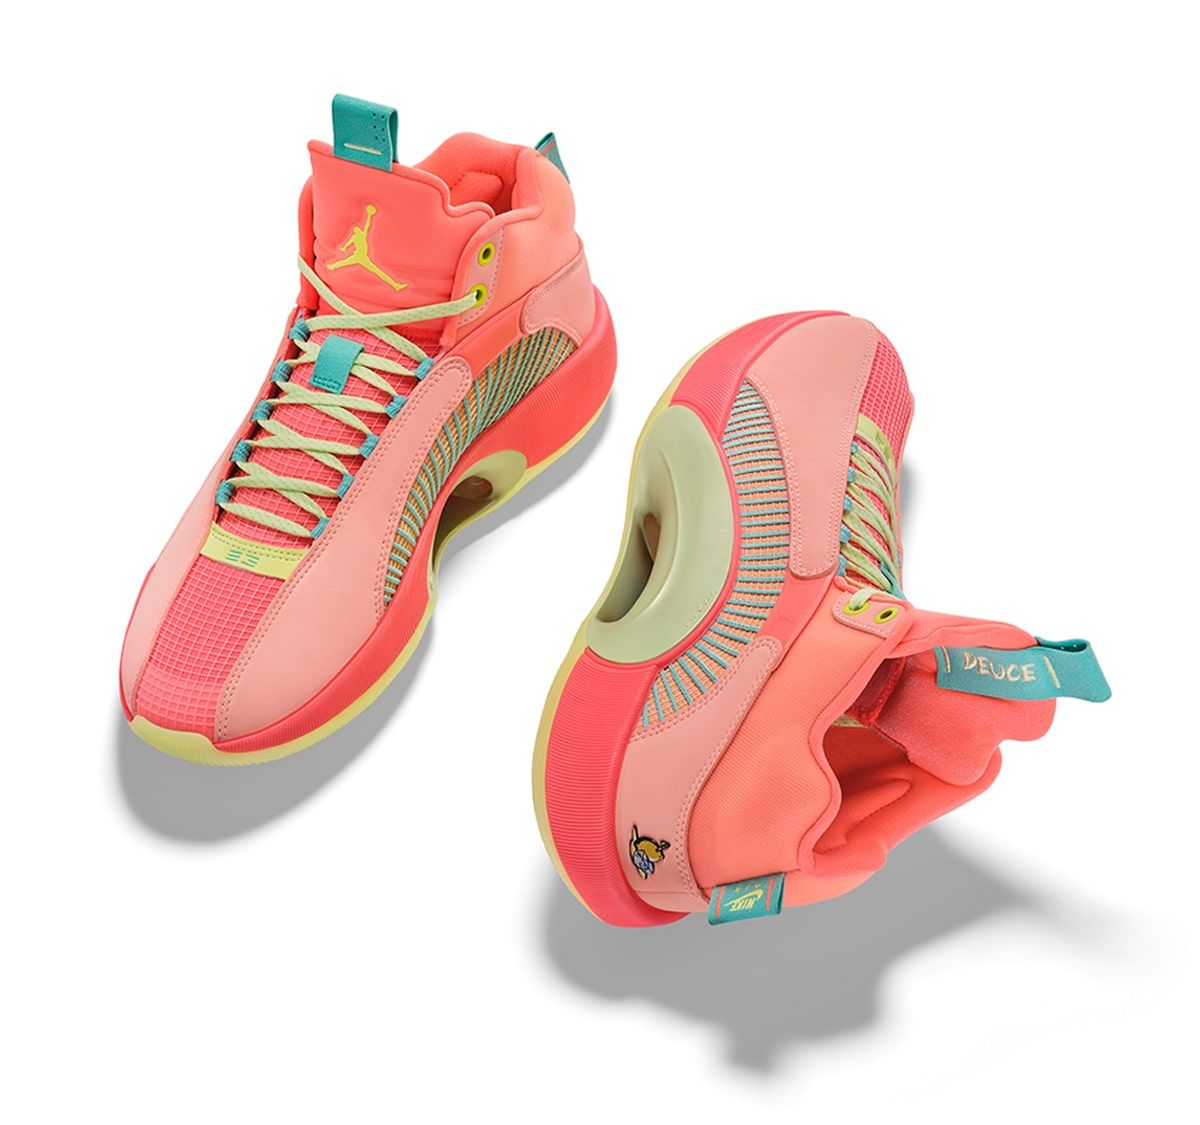 First Looks // Jayson Tatum x Air Jordan 35 “Pink Lemonade”